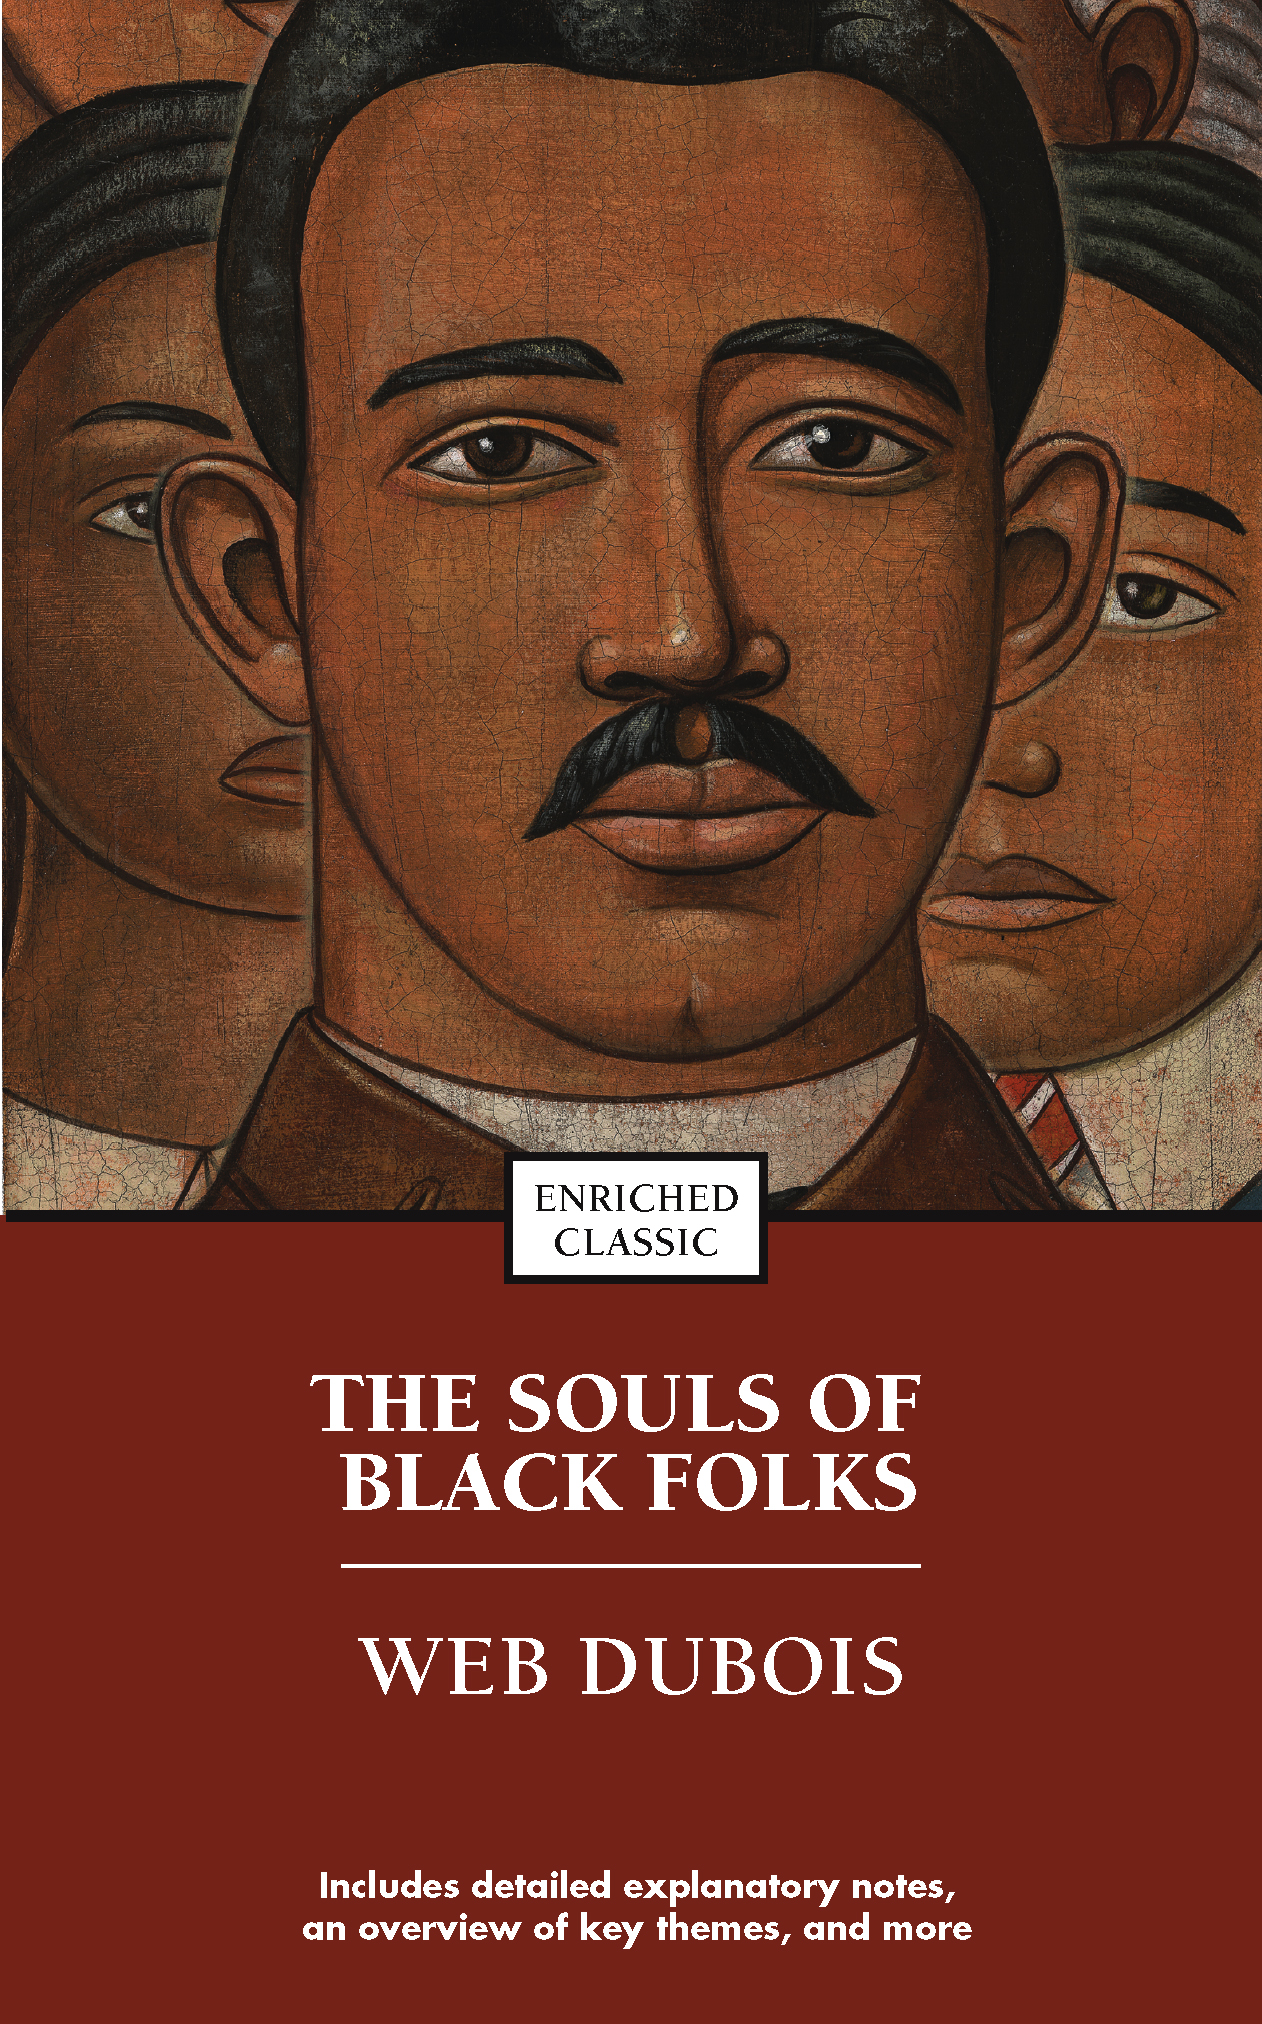 “The Souls of Black Folk”: W. E. B. Du Bois’ contribution to literature